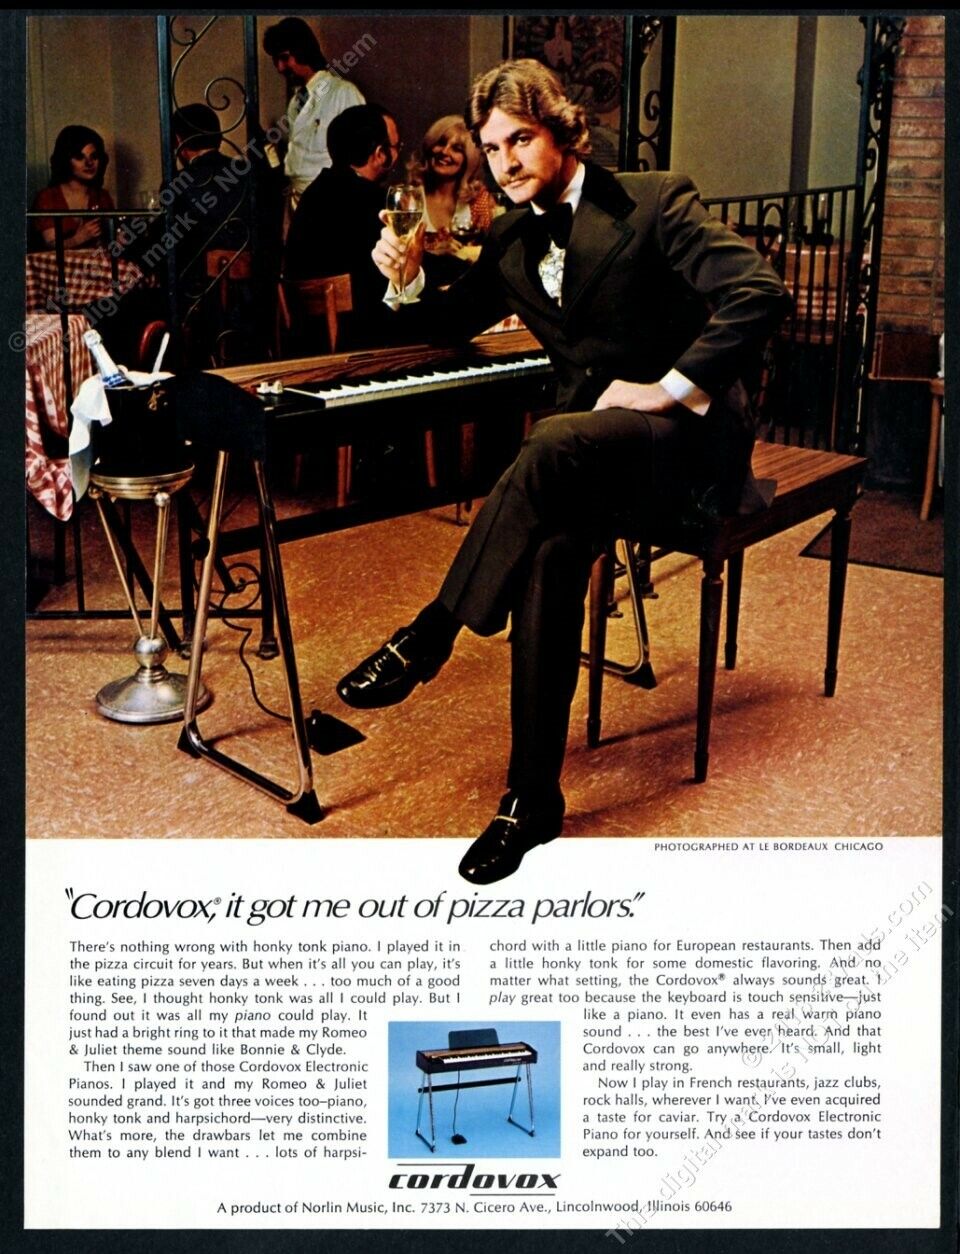 1974 Cordovox electronic piano Le Bordeaux Chicago photo vintage print ad